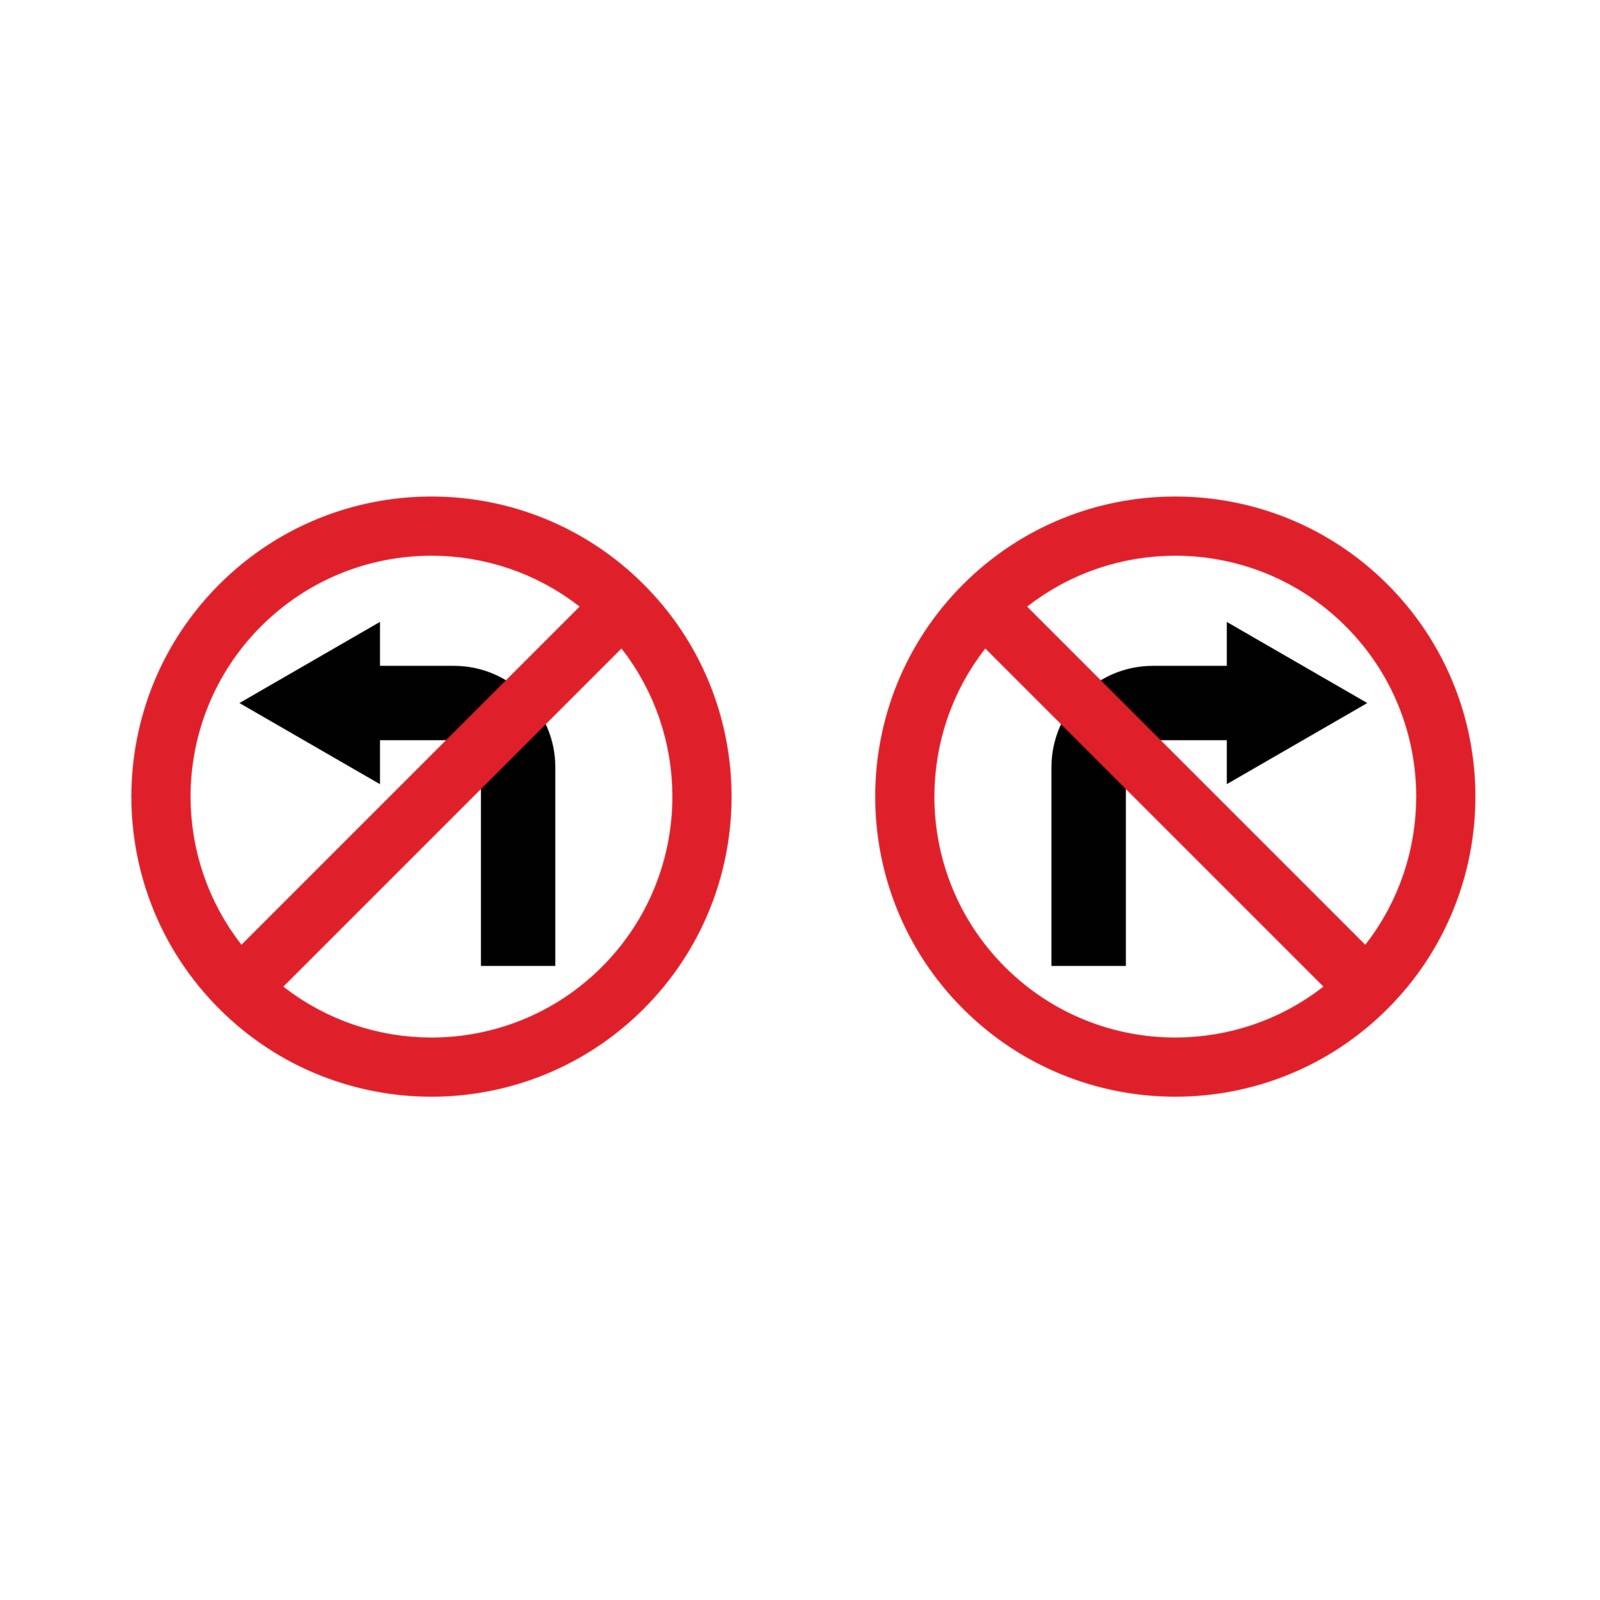 No Turn Left or No Turn Right Sign Illustration Design. Vector EPS 10.